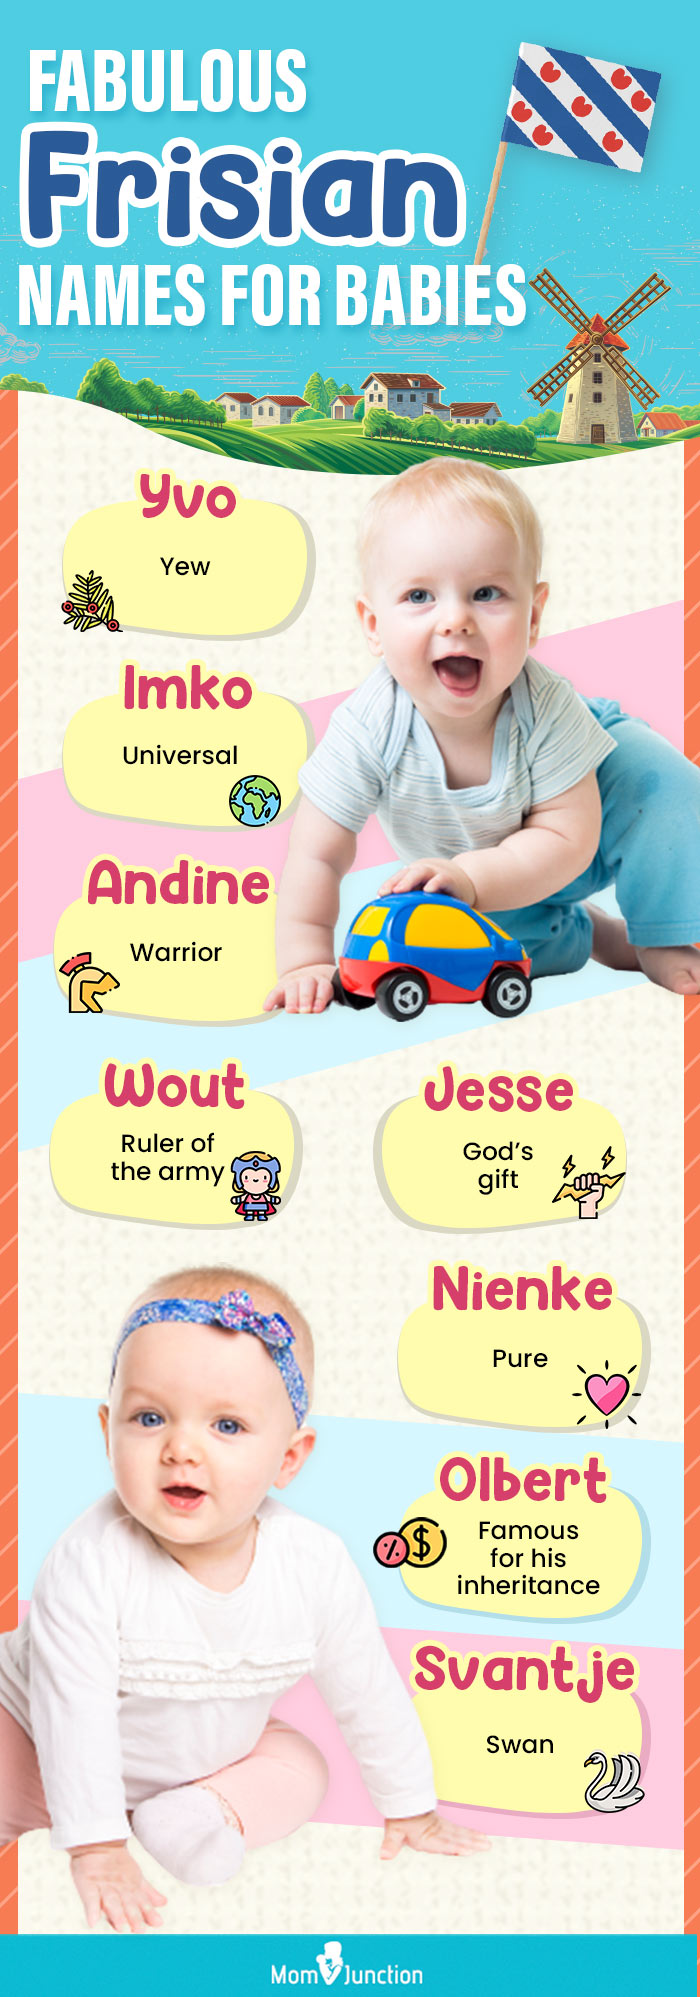 fabulous frisian names for babies (infographic)